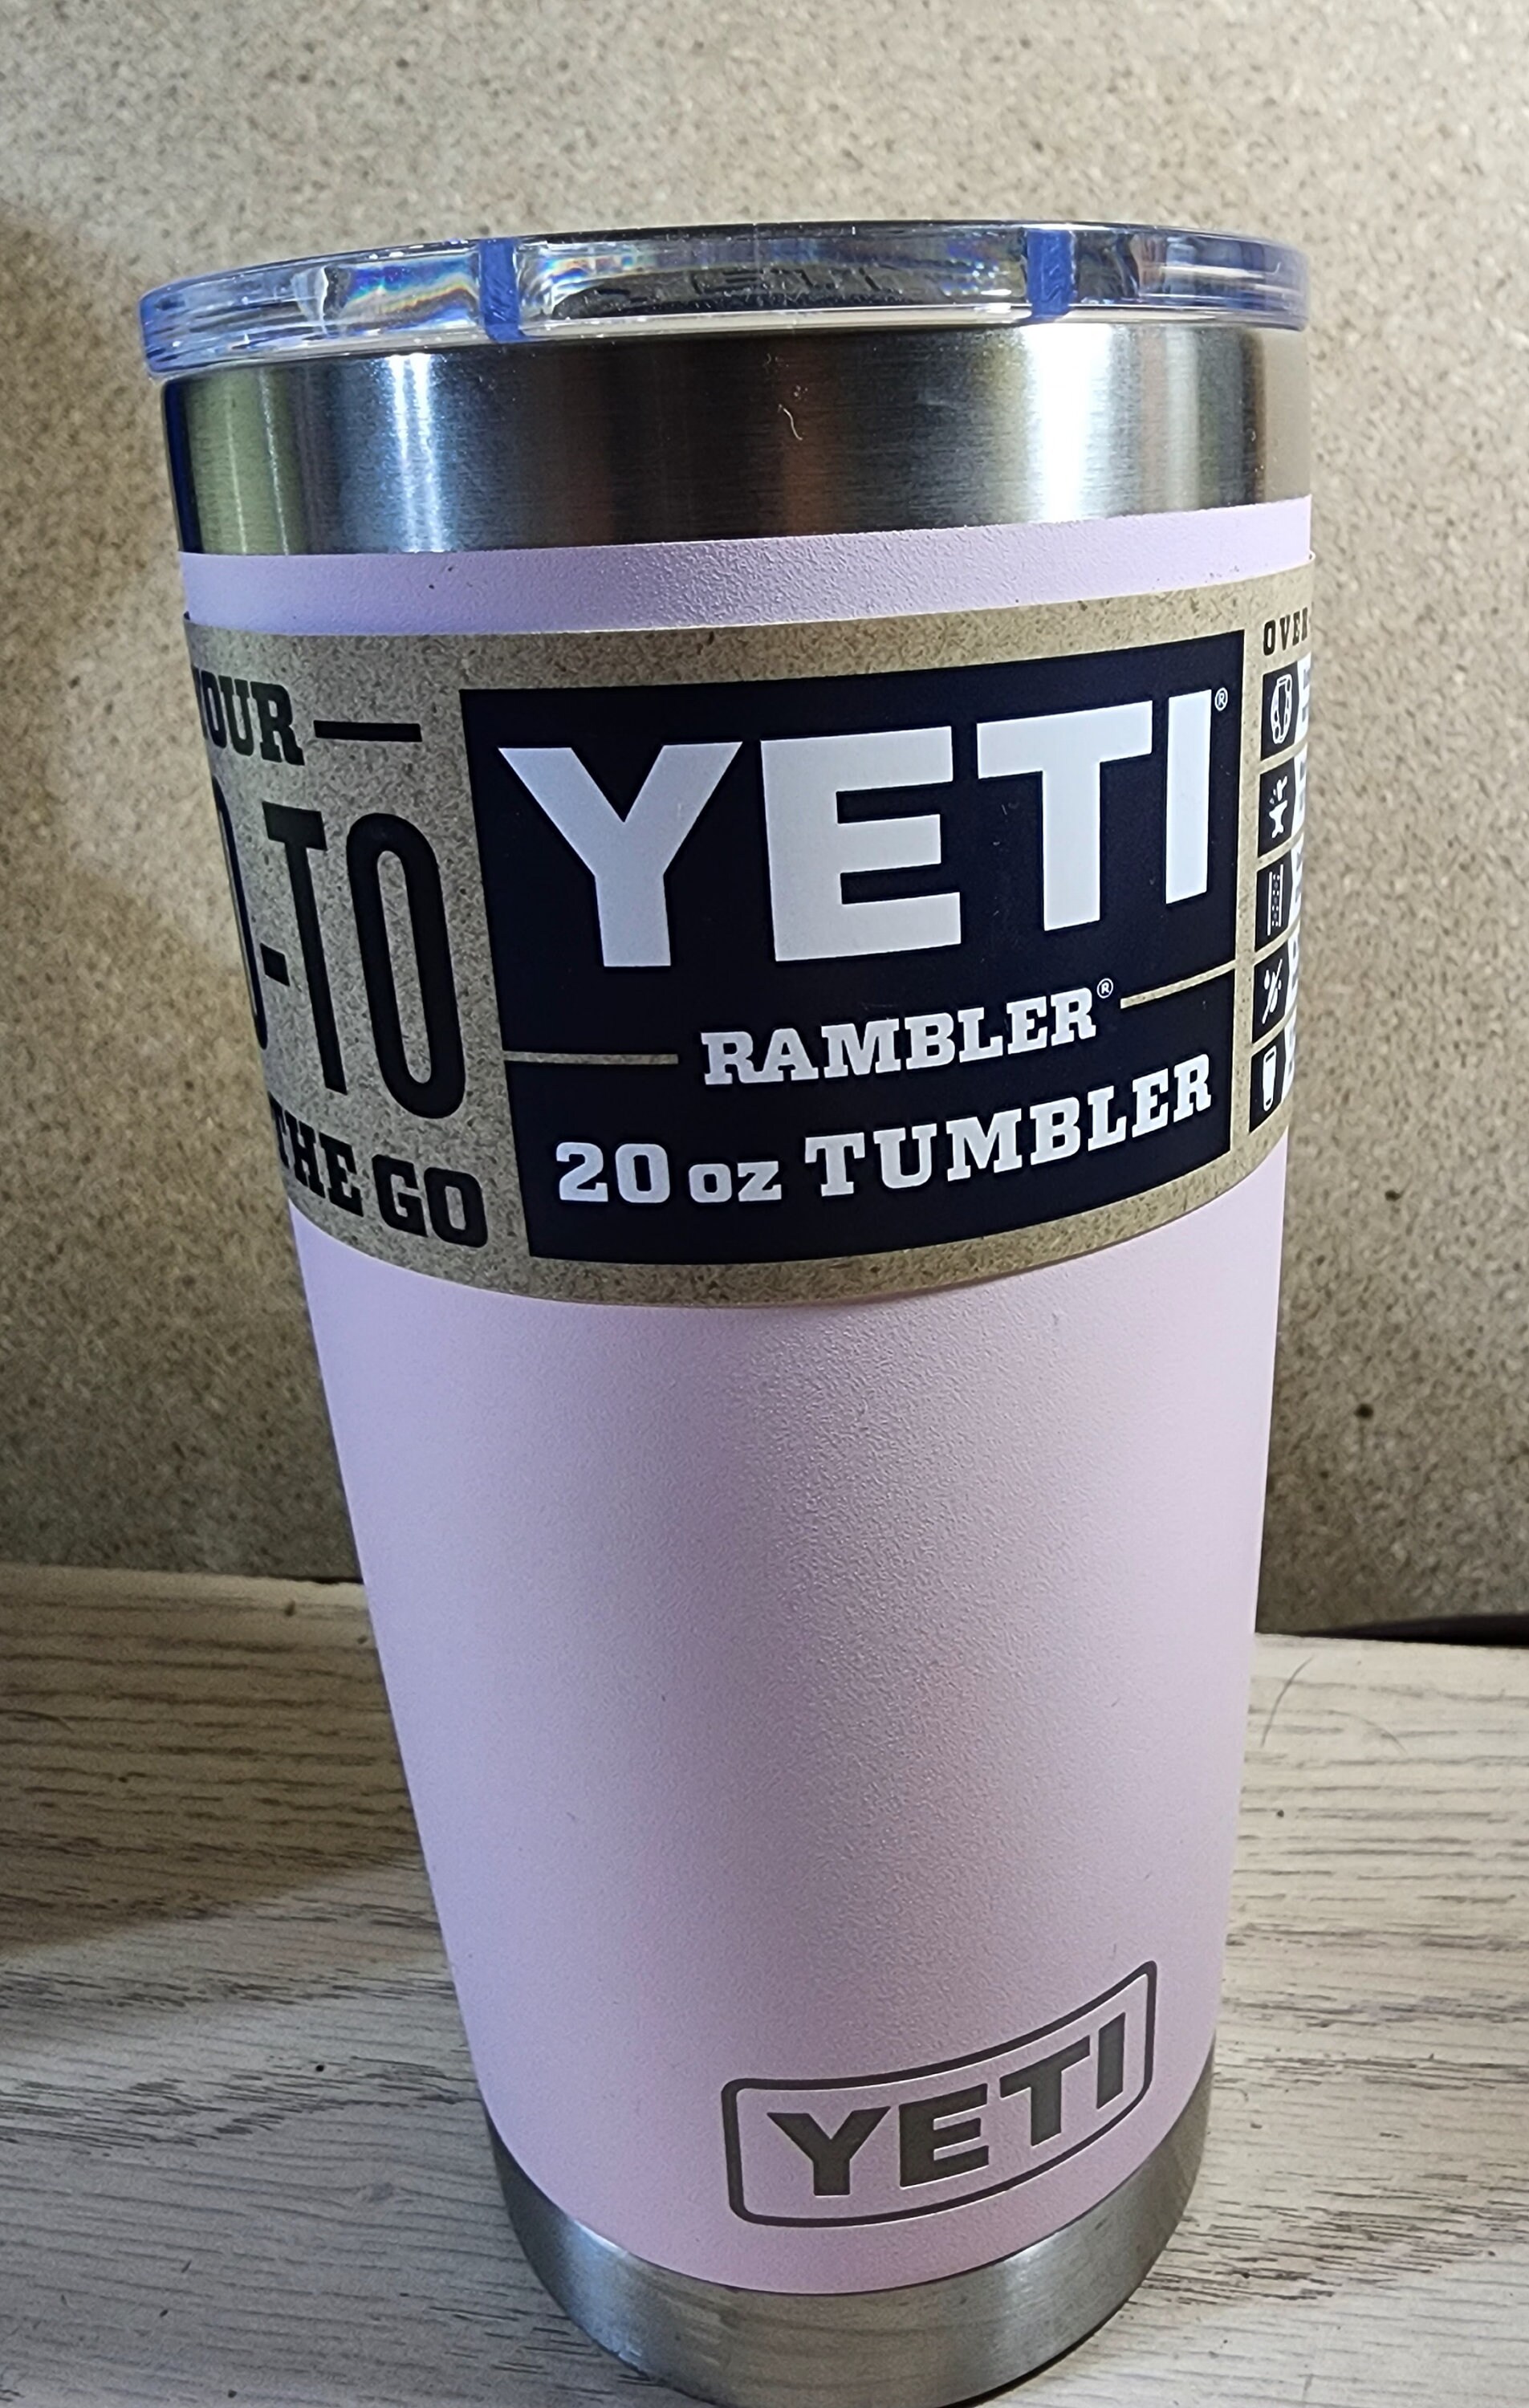 Discontinued yeti rambler 20oz mug [ice pink color]